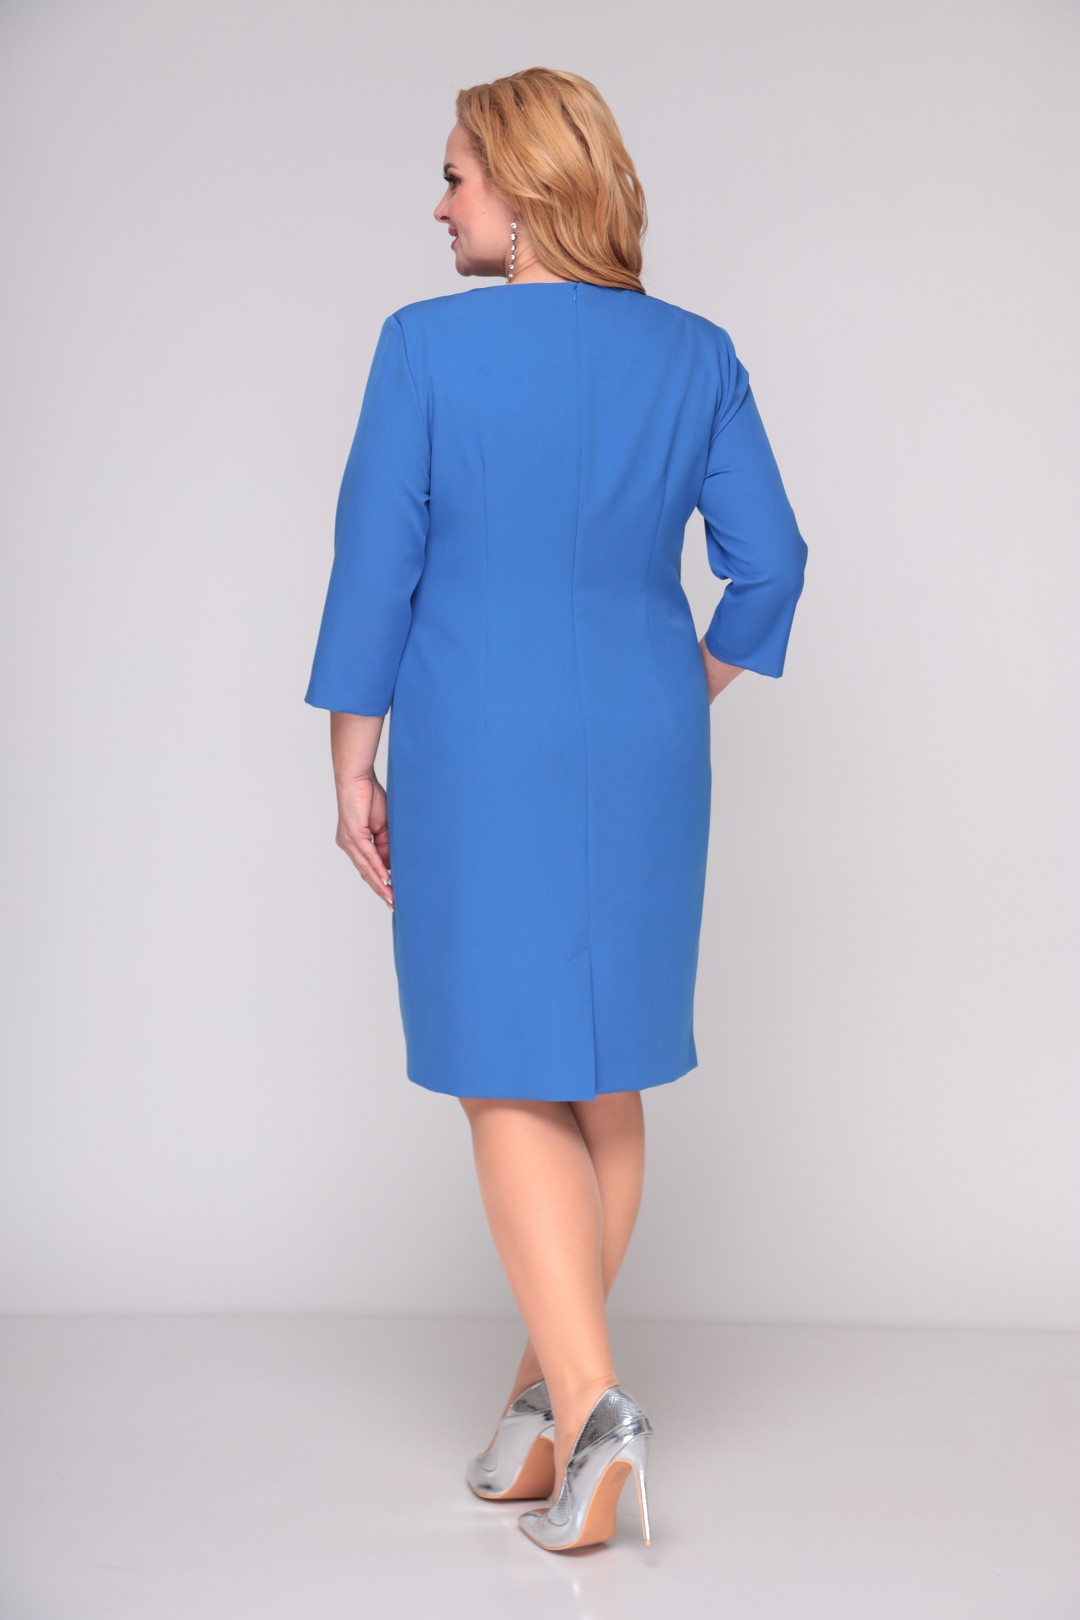 Платье Мода-Версаль 2356 голубой